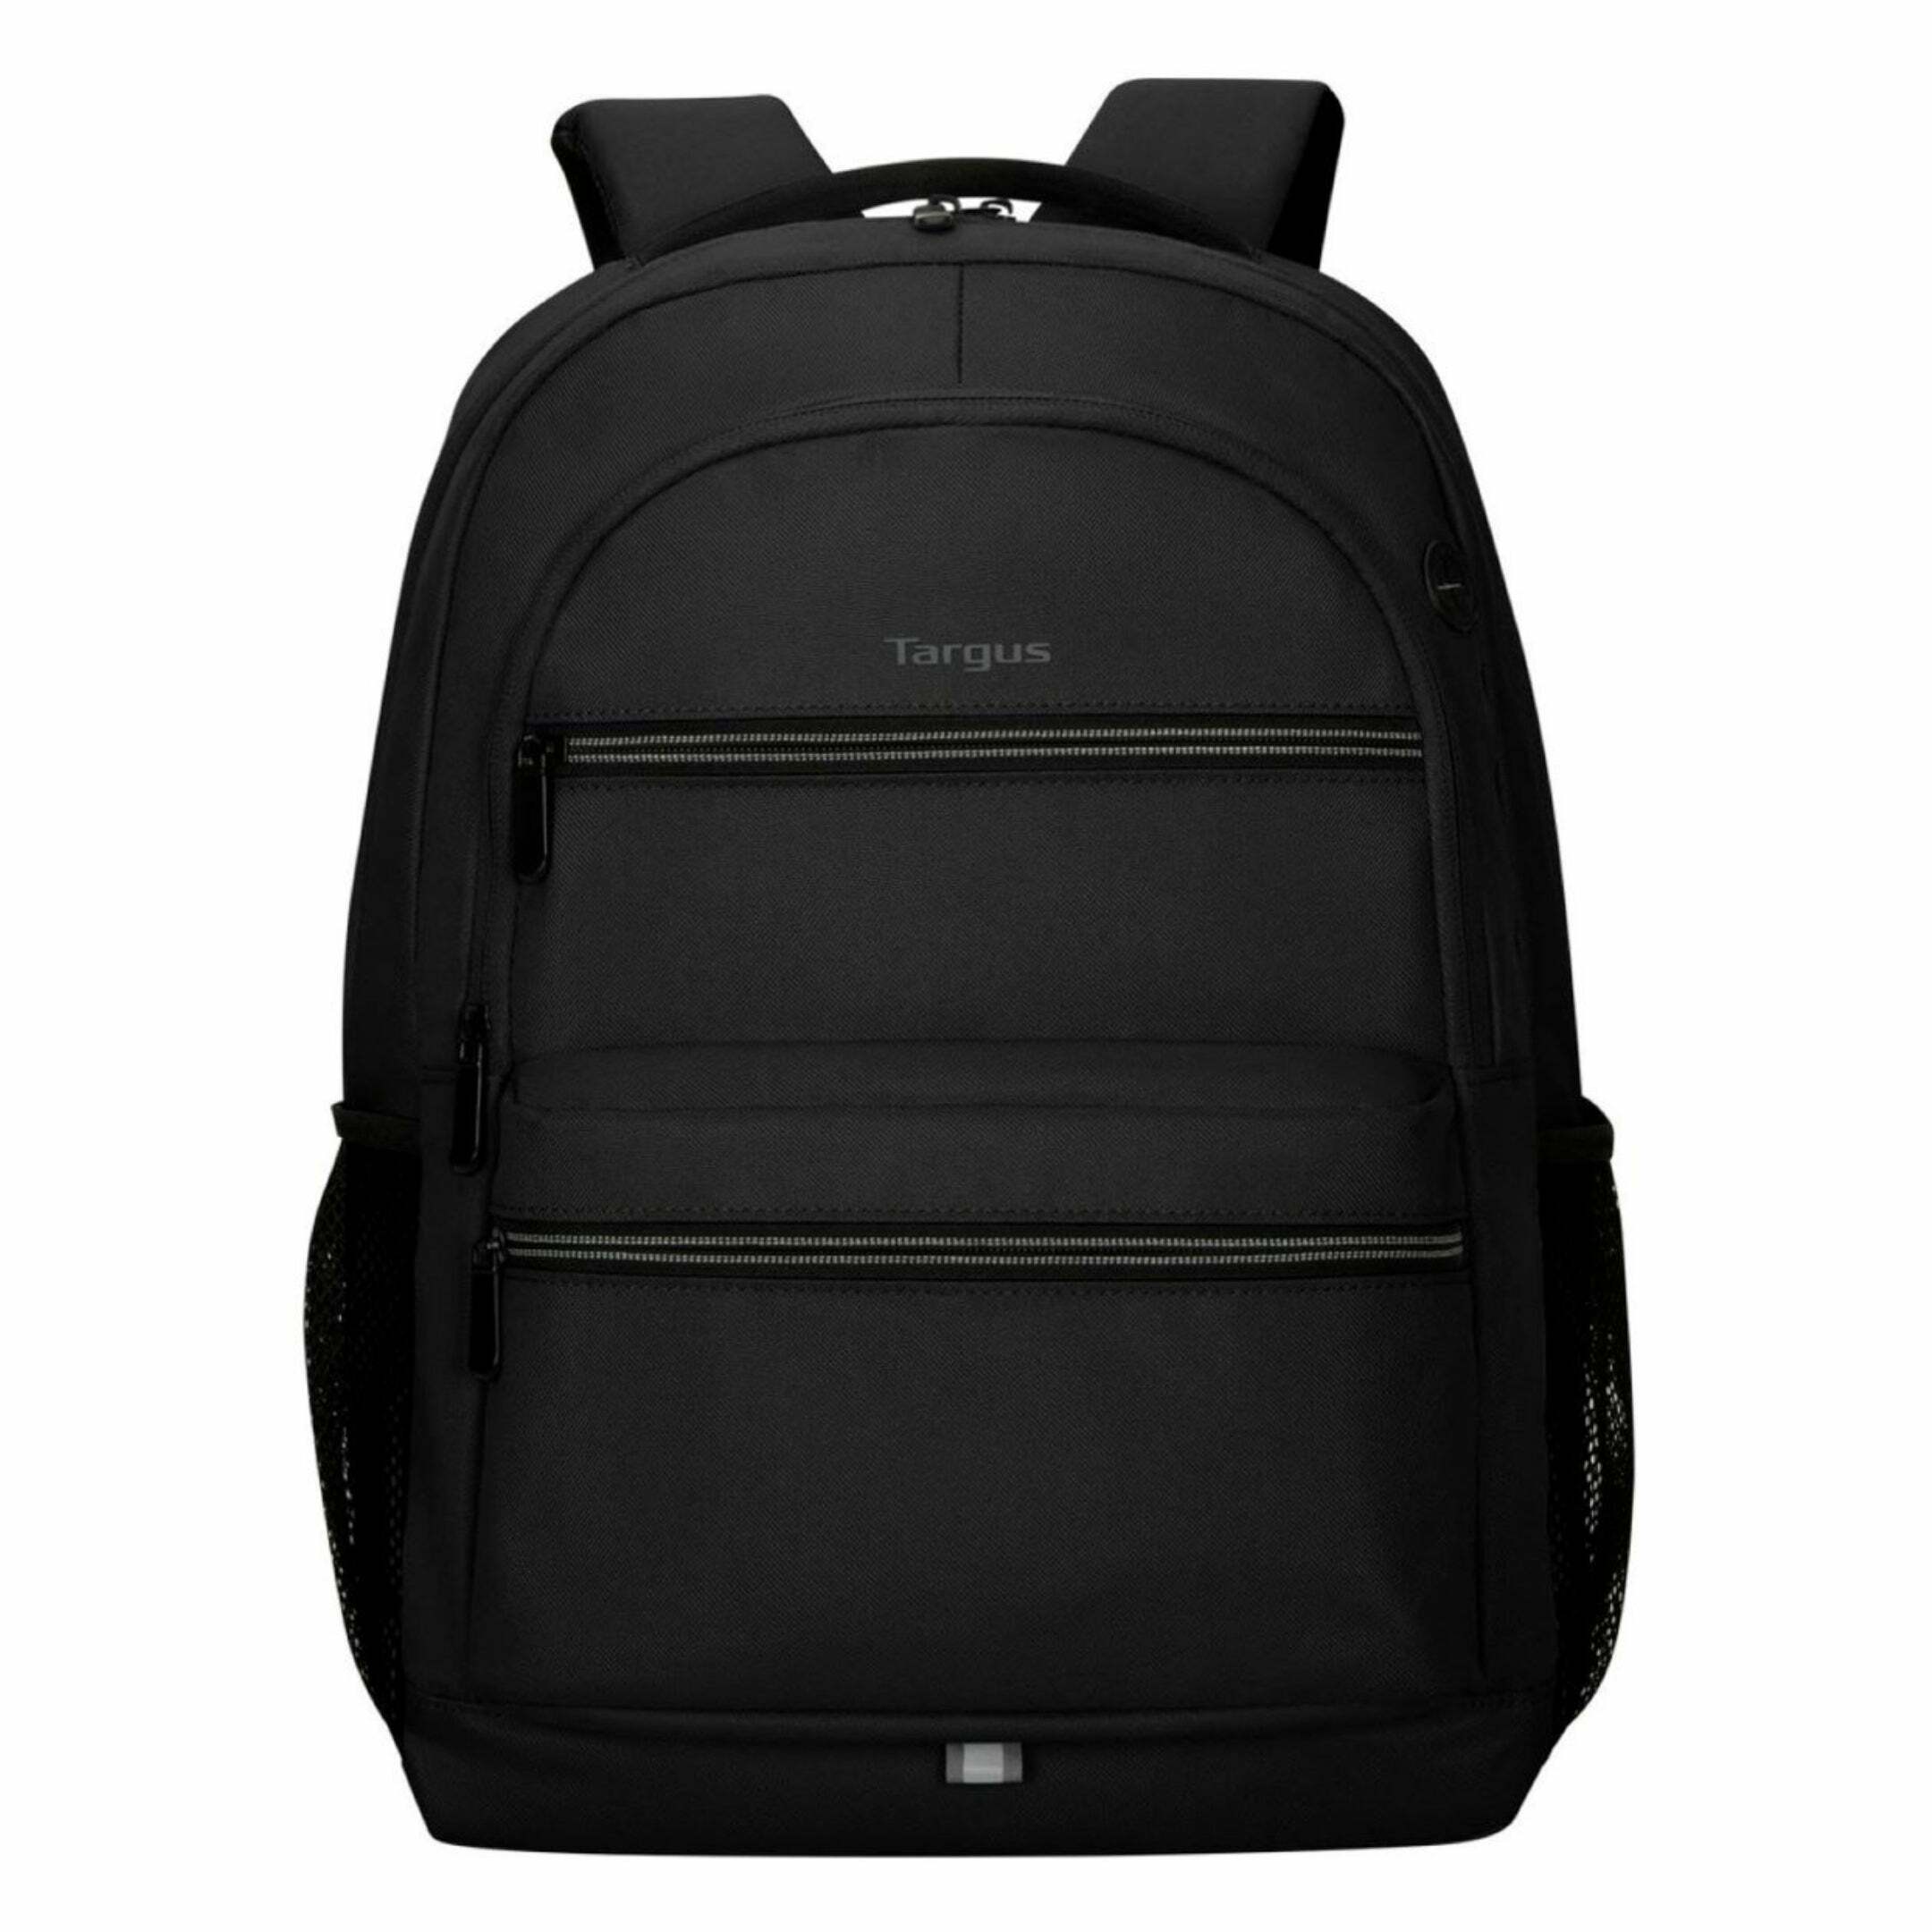 Targus Octave II Backpack for 15.6” Laptops - Ergonomic and Reflective Design, Black